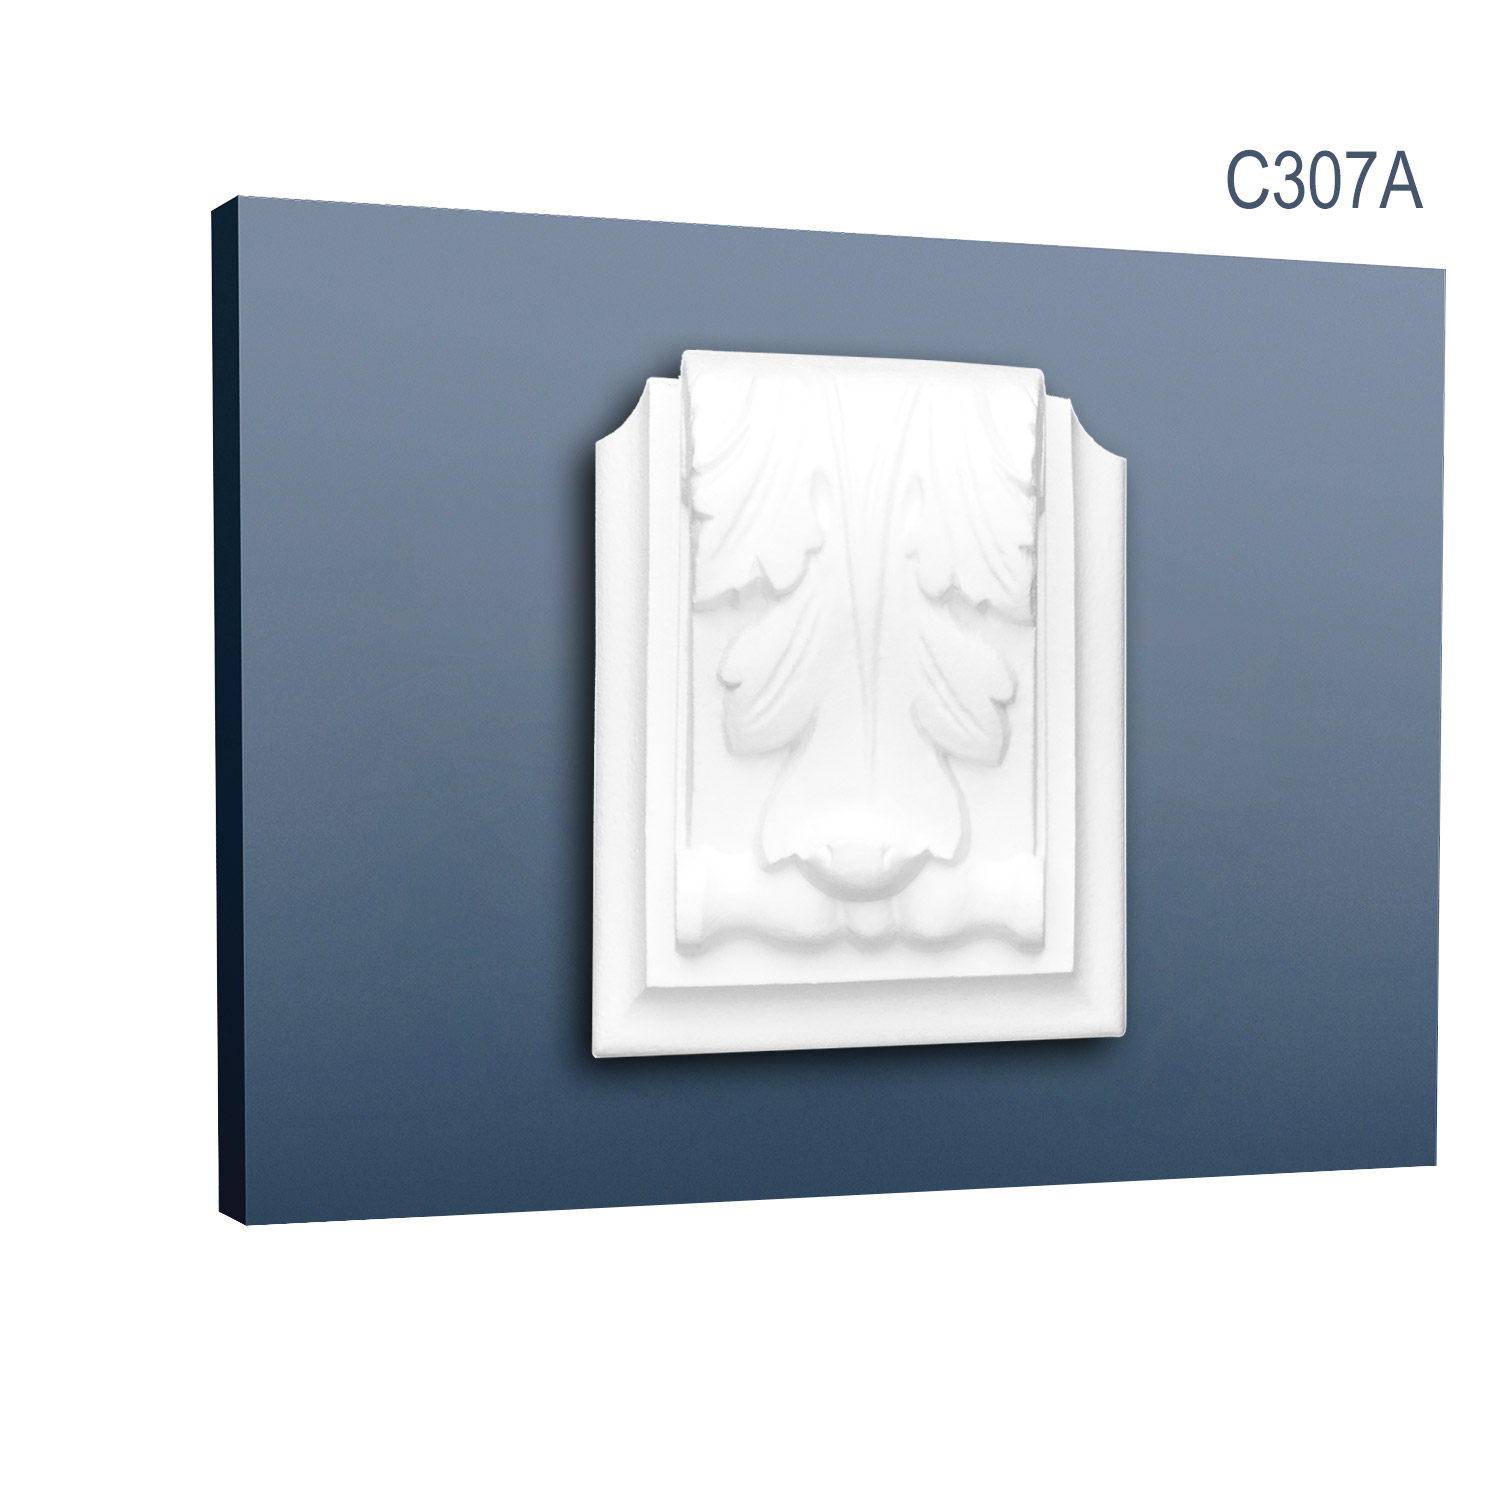 Cornisa Luxxus C307A, Dimensiuni: 7.5 X 9.4 X 4 cm, Orac Decor Orac Decor